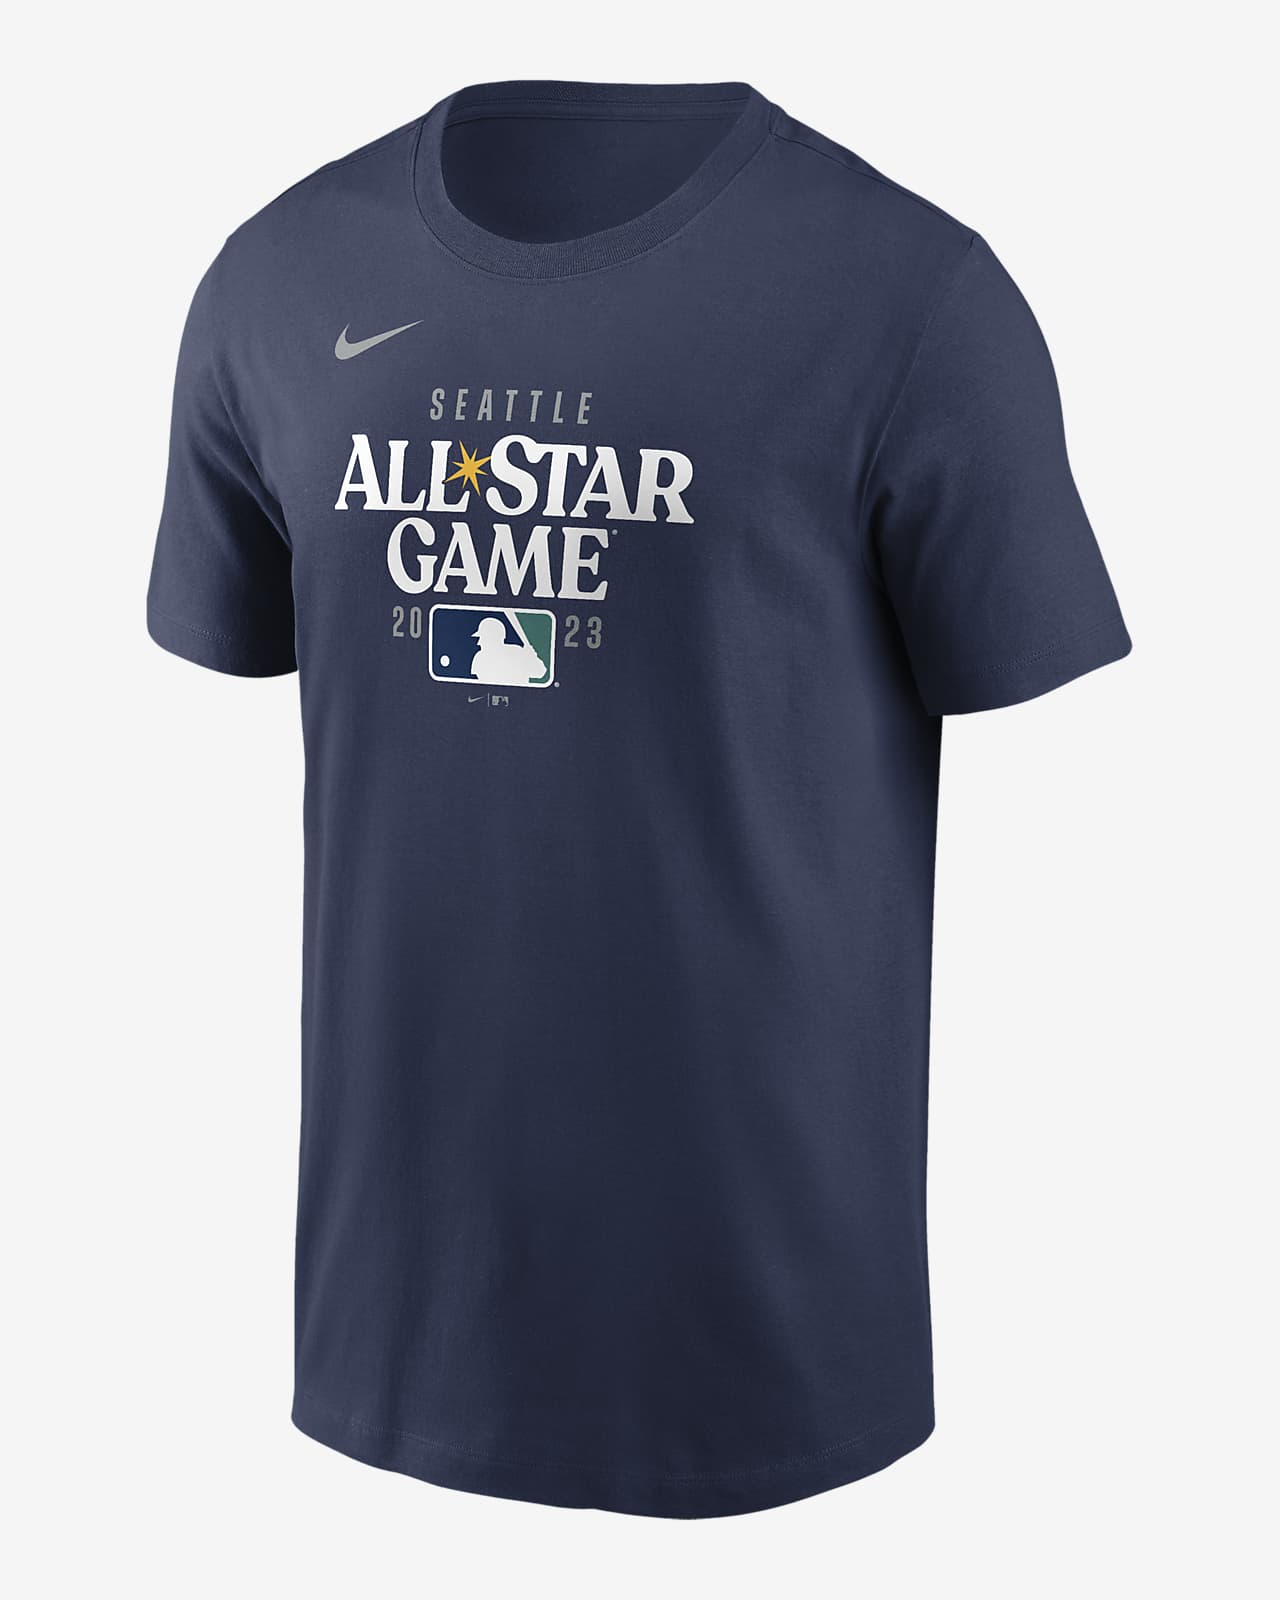 2023 All-Star Game Essential Men's Nike MLB T-Shirt